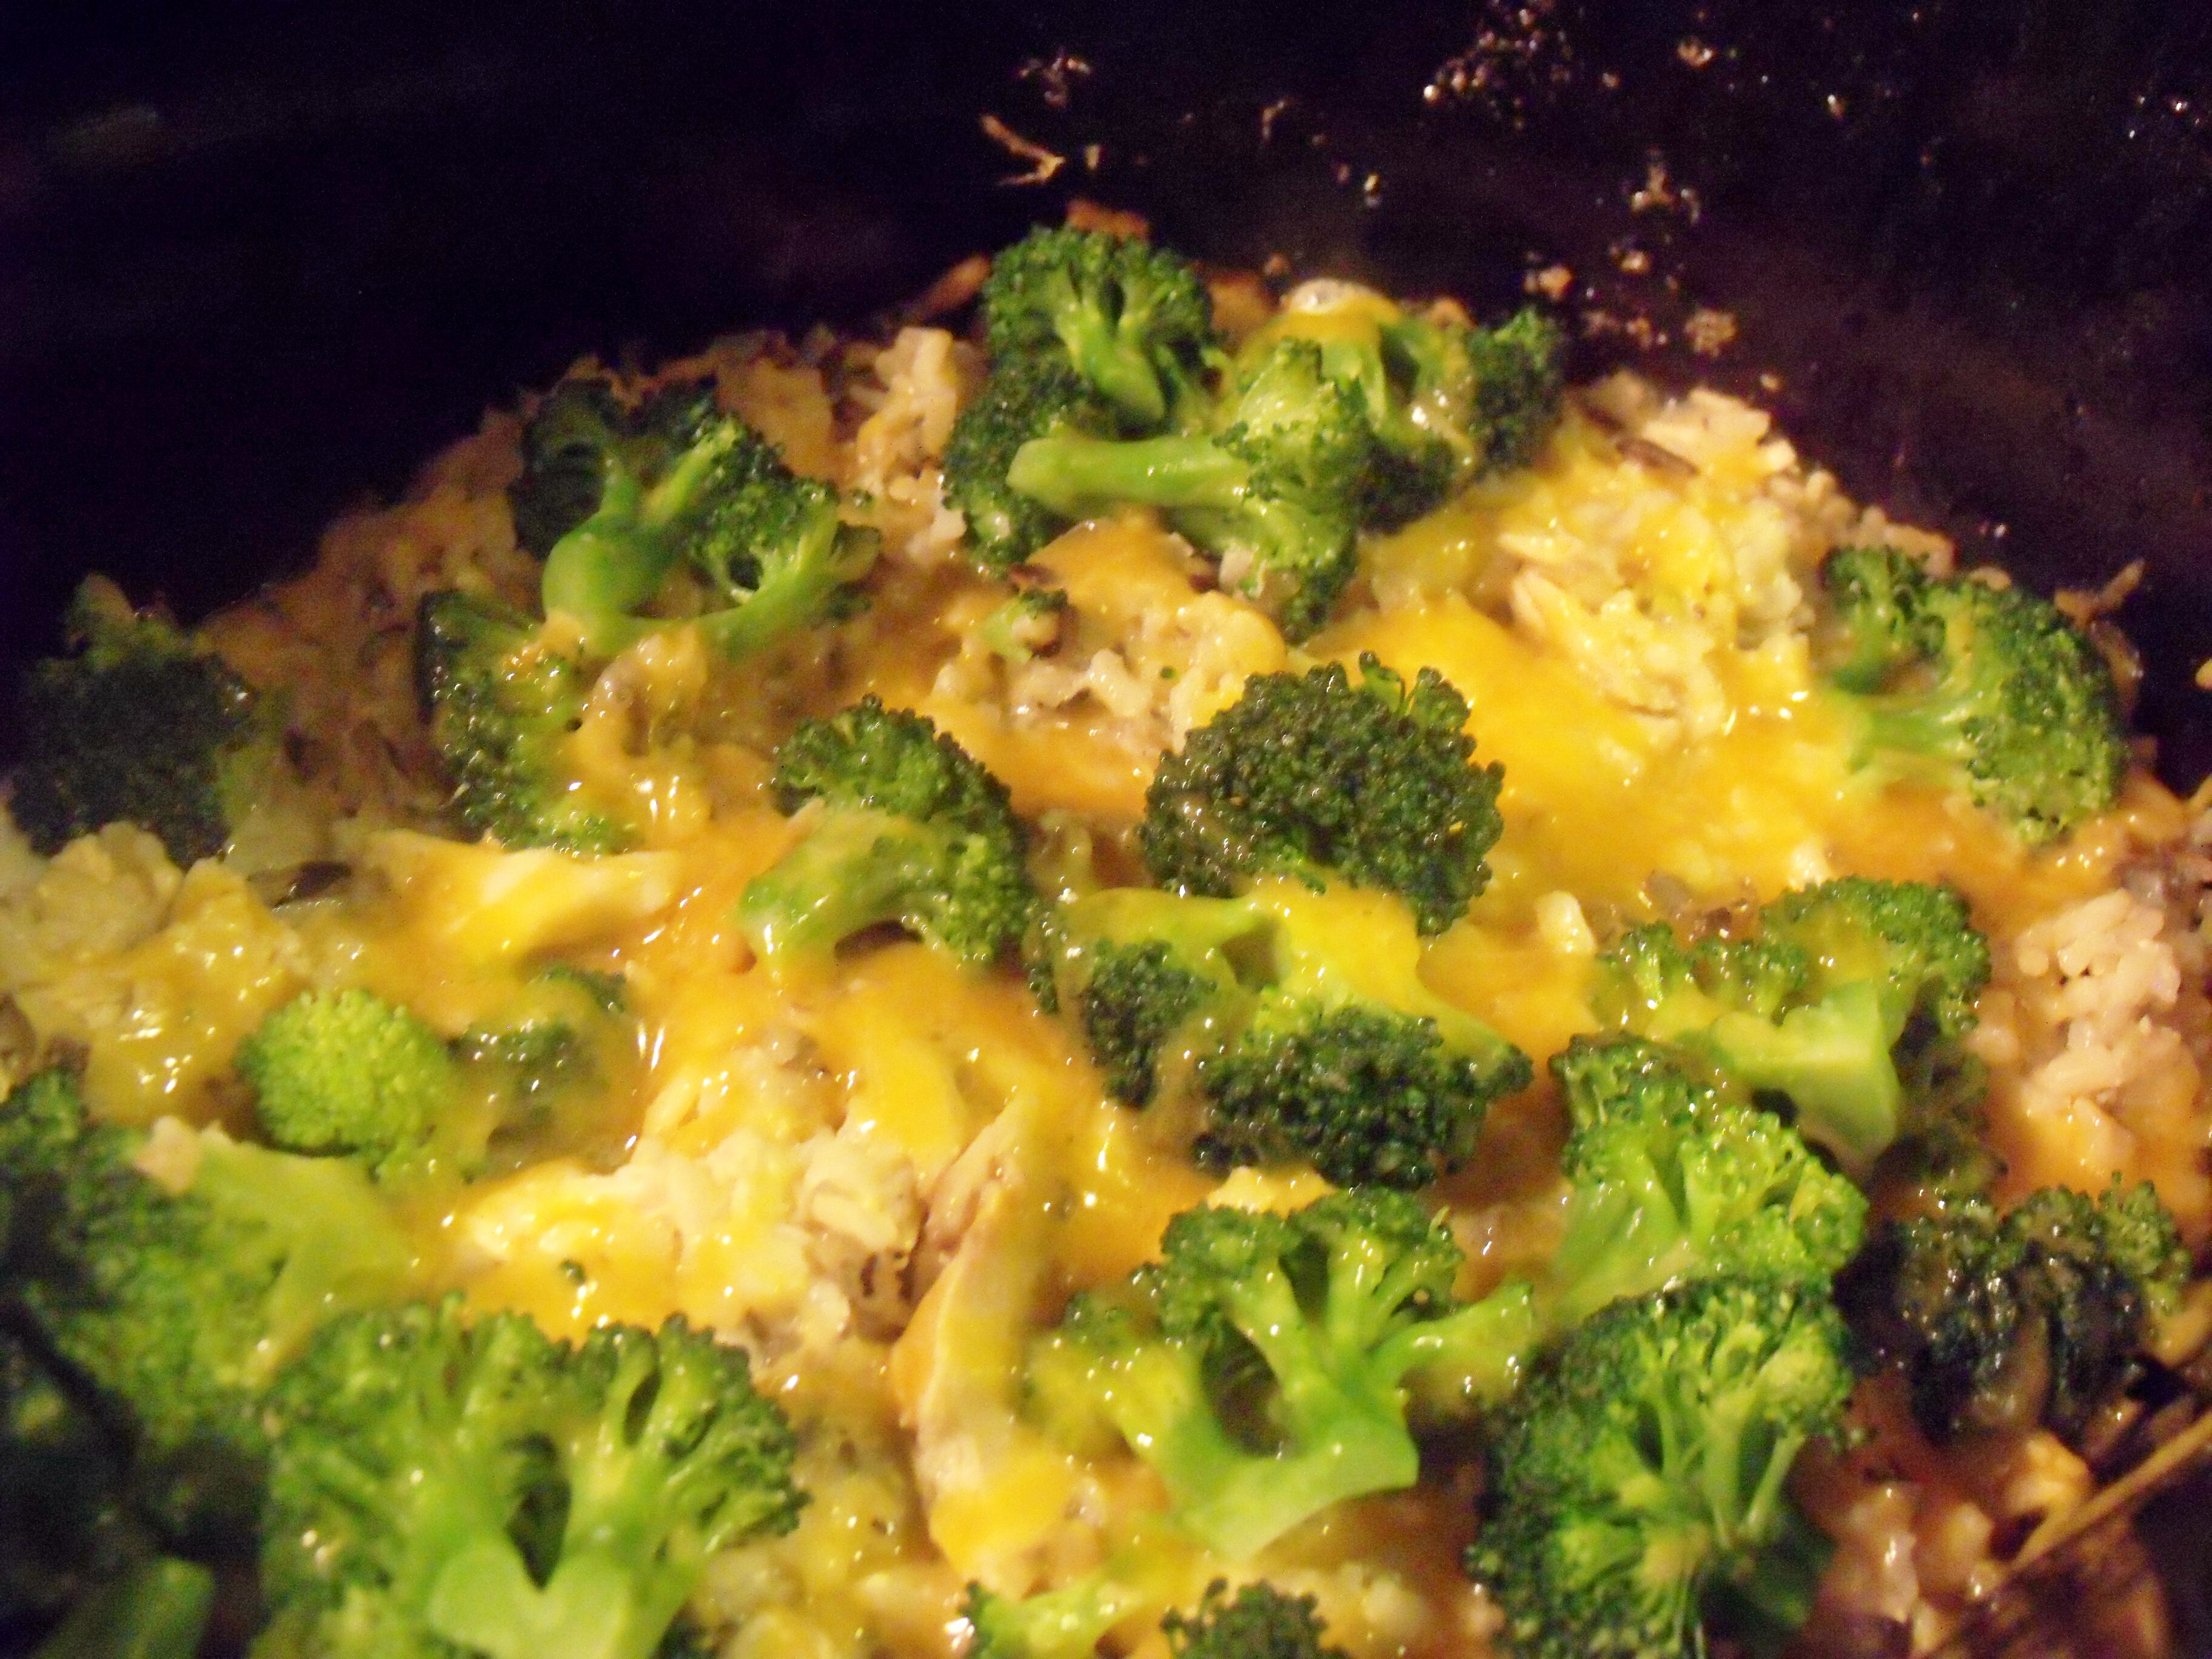 Slow Cooker Broccoli Casserole